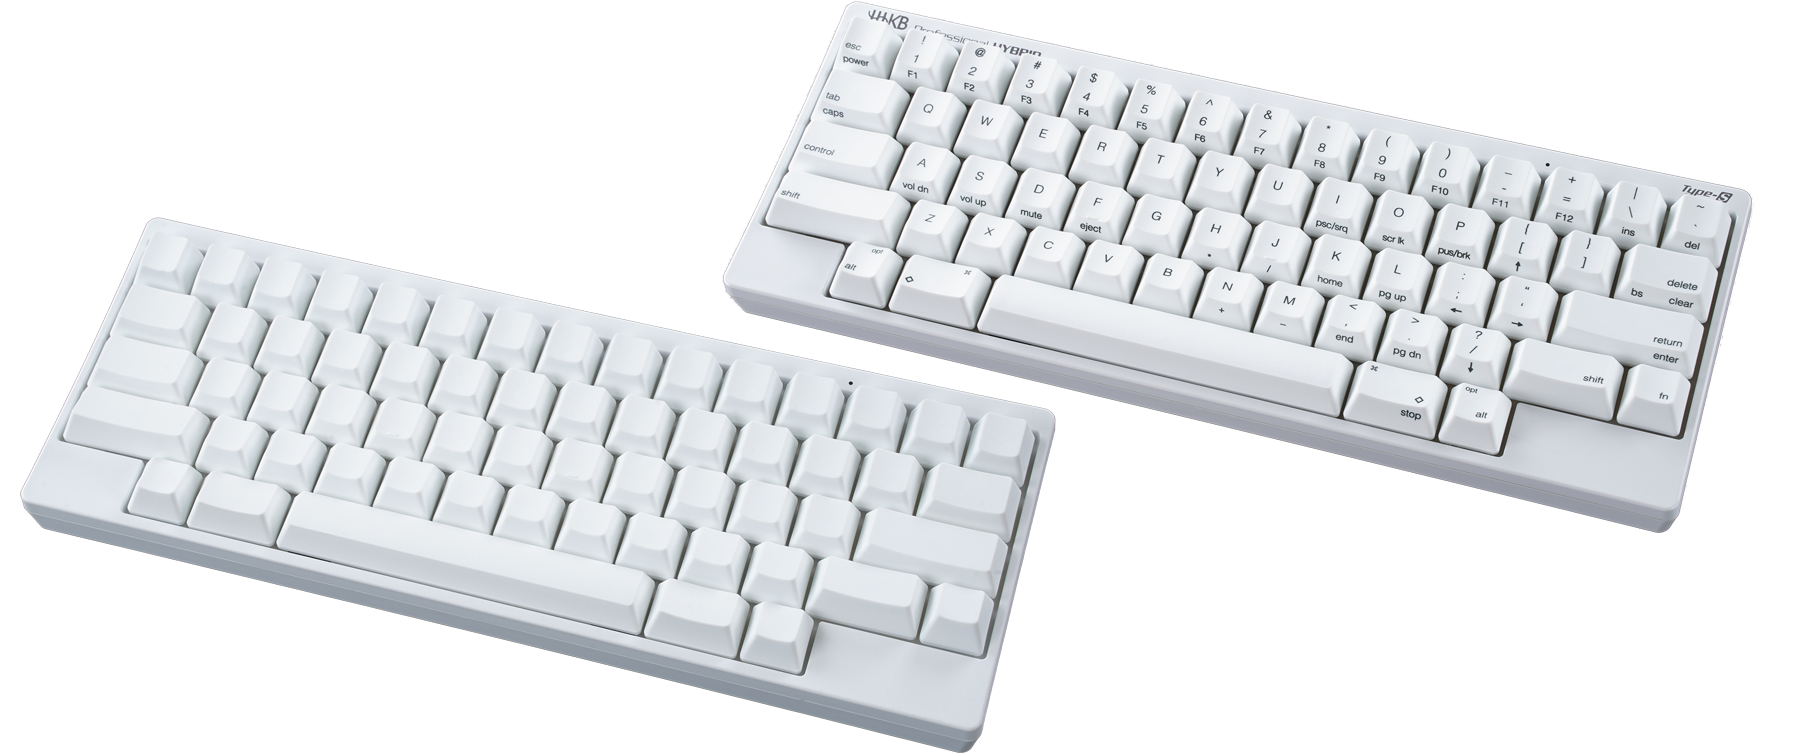 HHKB HYBRID Type S Snow printed and blank keyboards